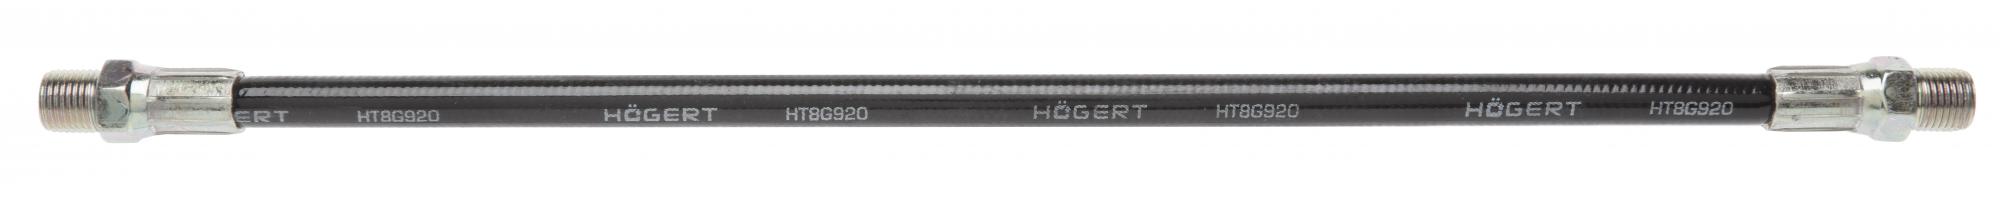 Шланг для рычажно- плунжерного шприца, 11x300 мм Högert  HT8G921_0